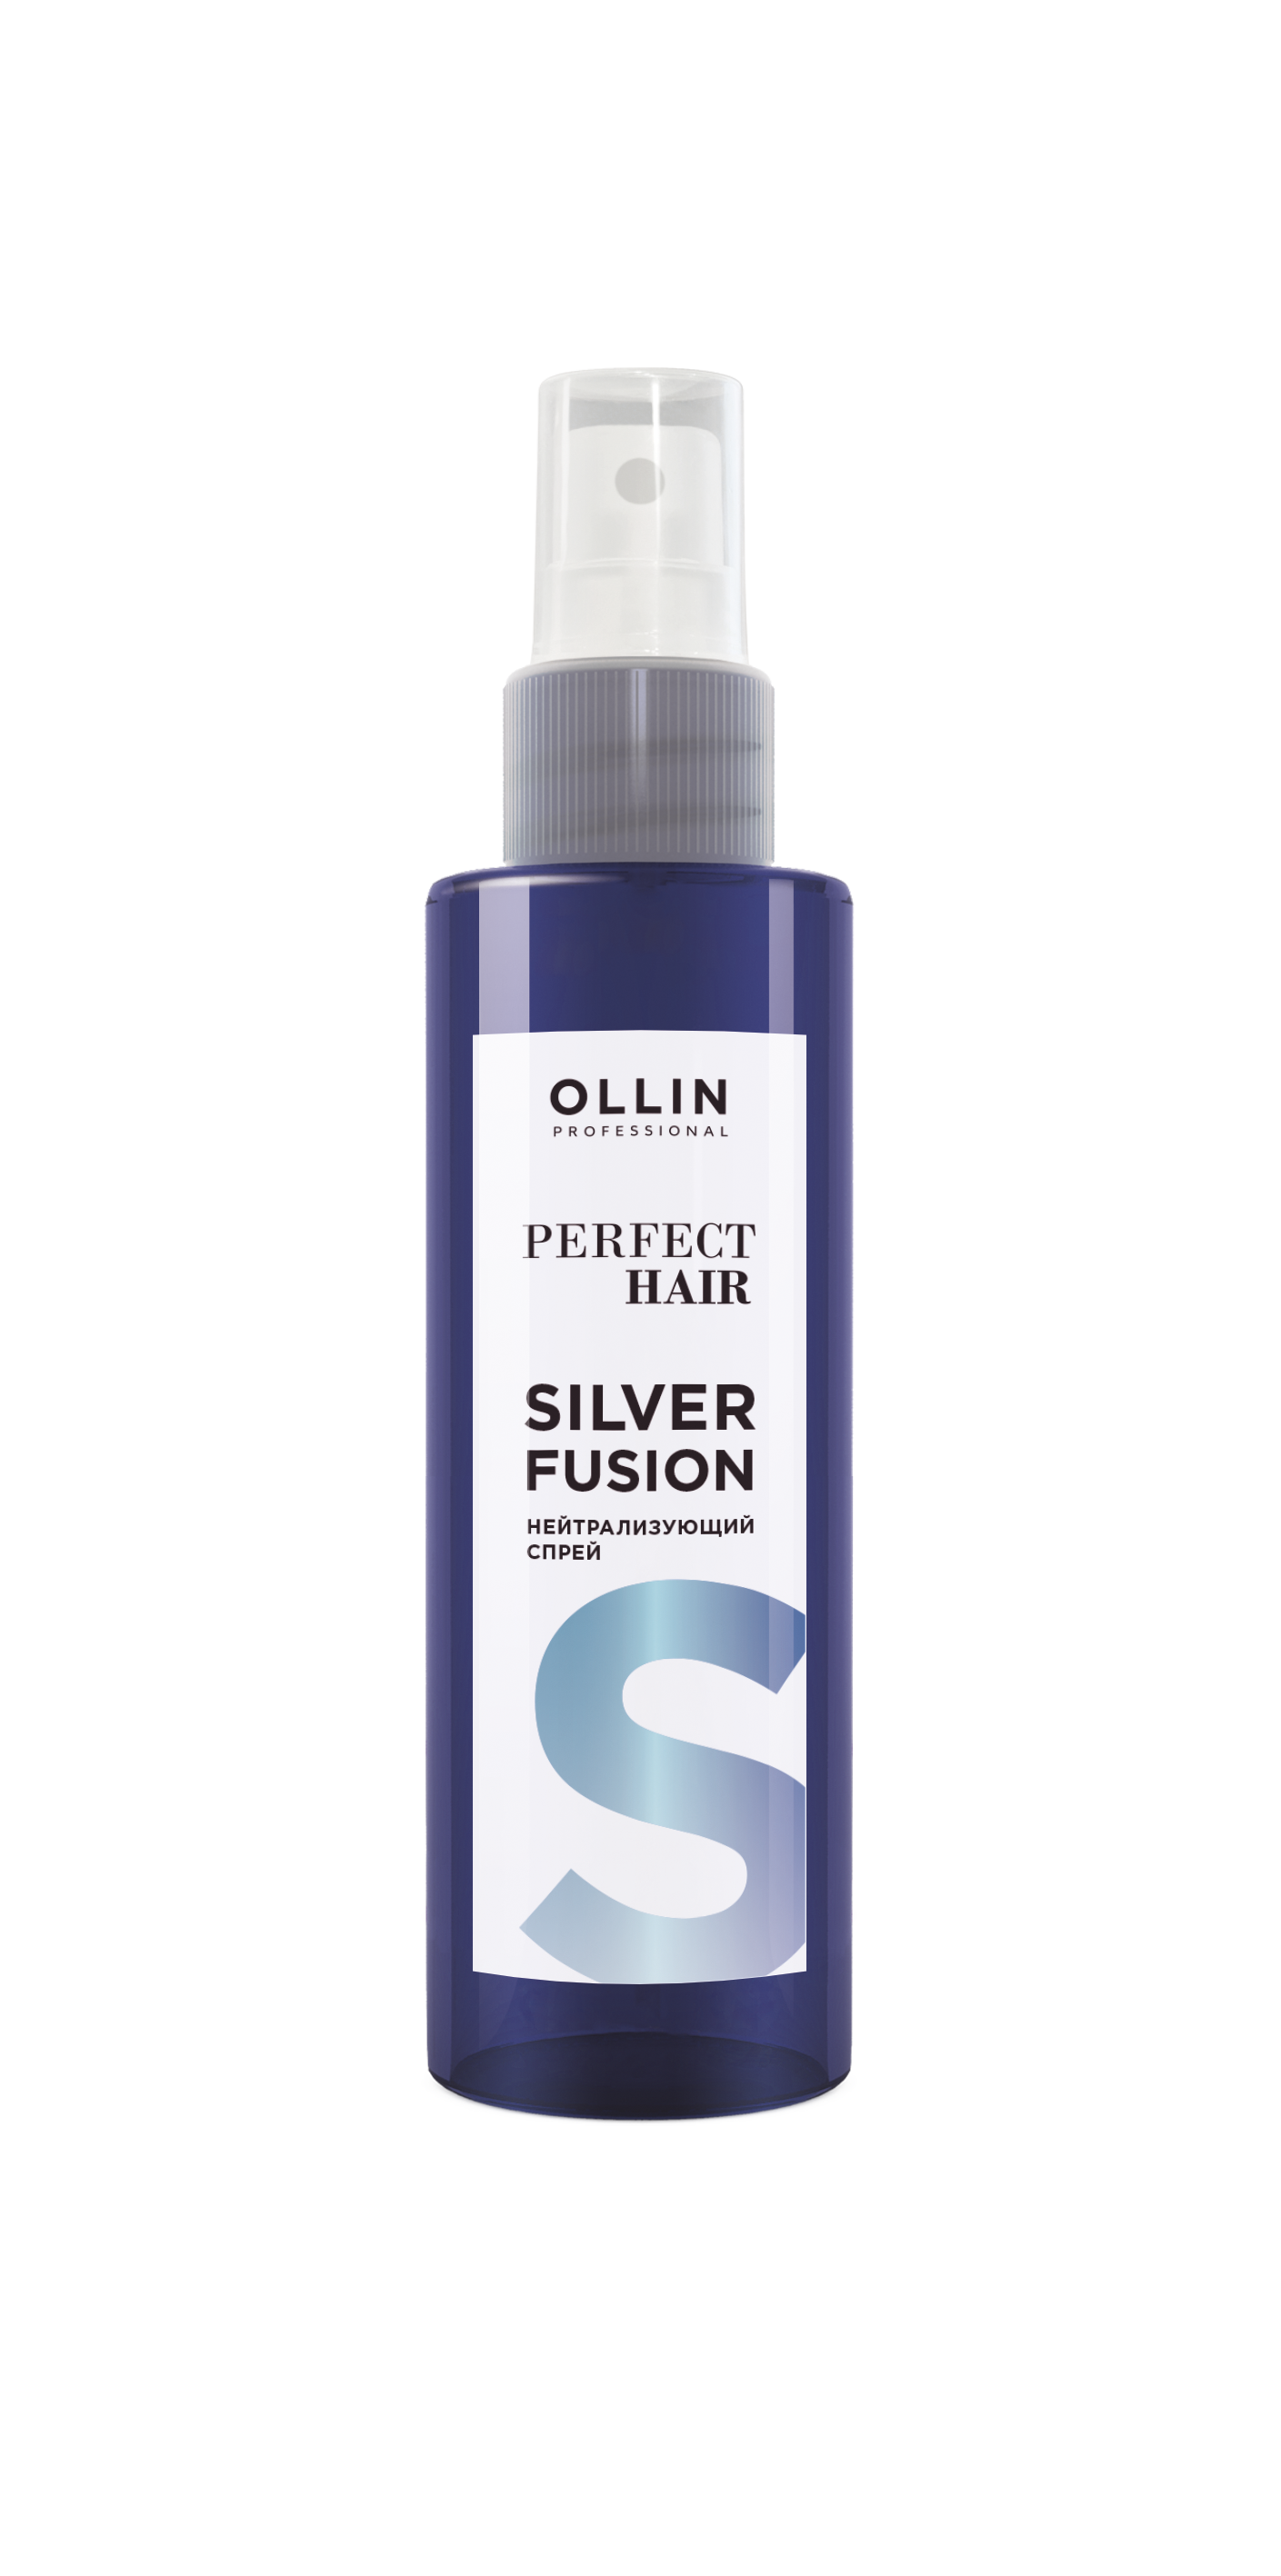 Нейтрализующий спрей для волос OLLIN PERFECT HAIR SILVER FUSION, 120мл